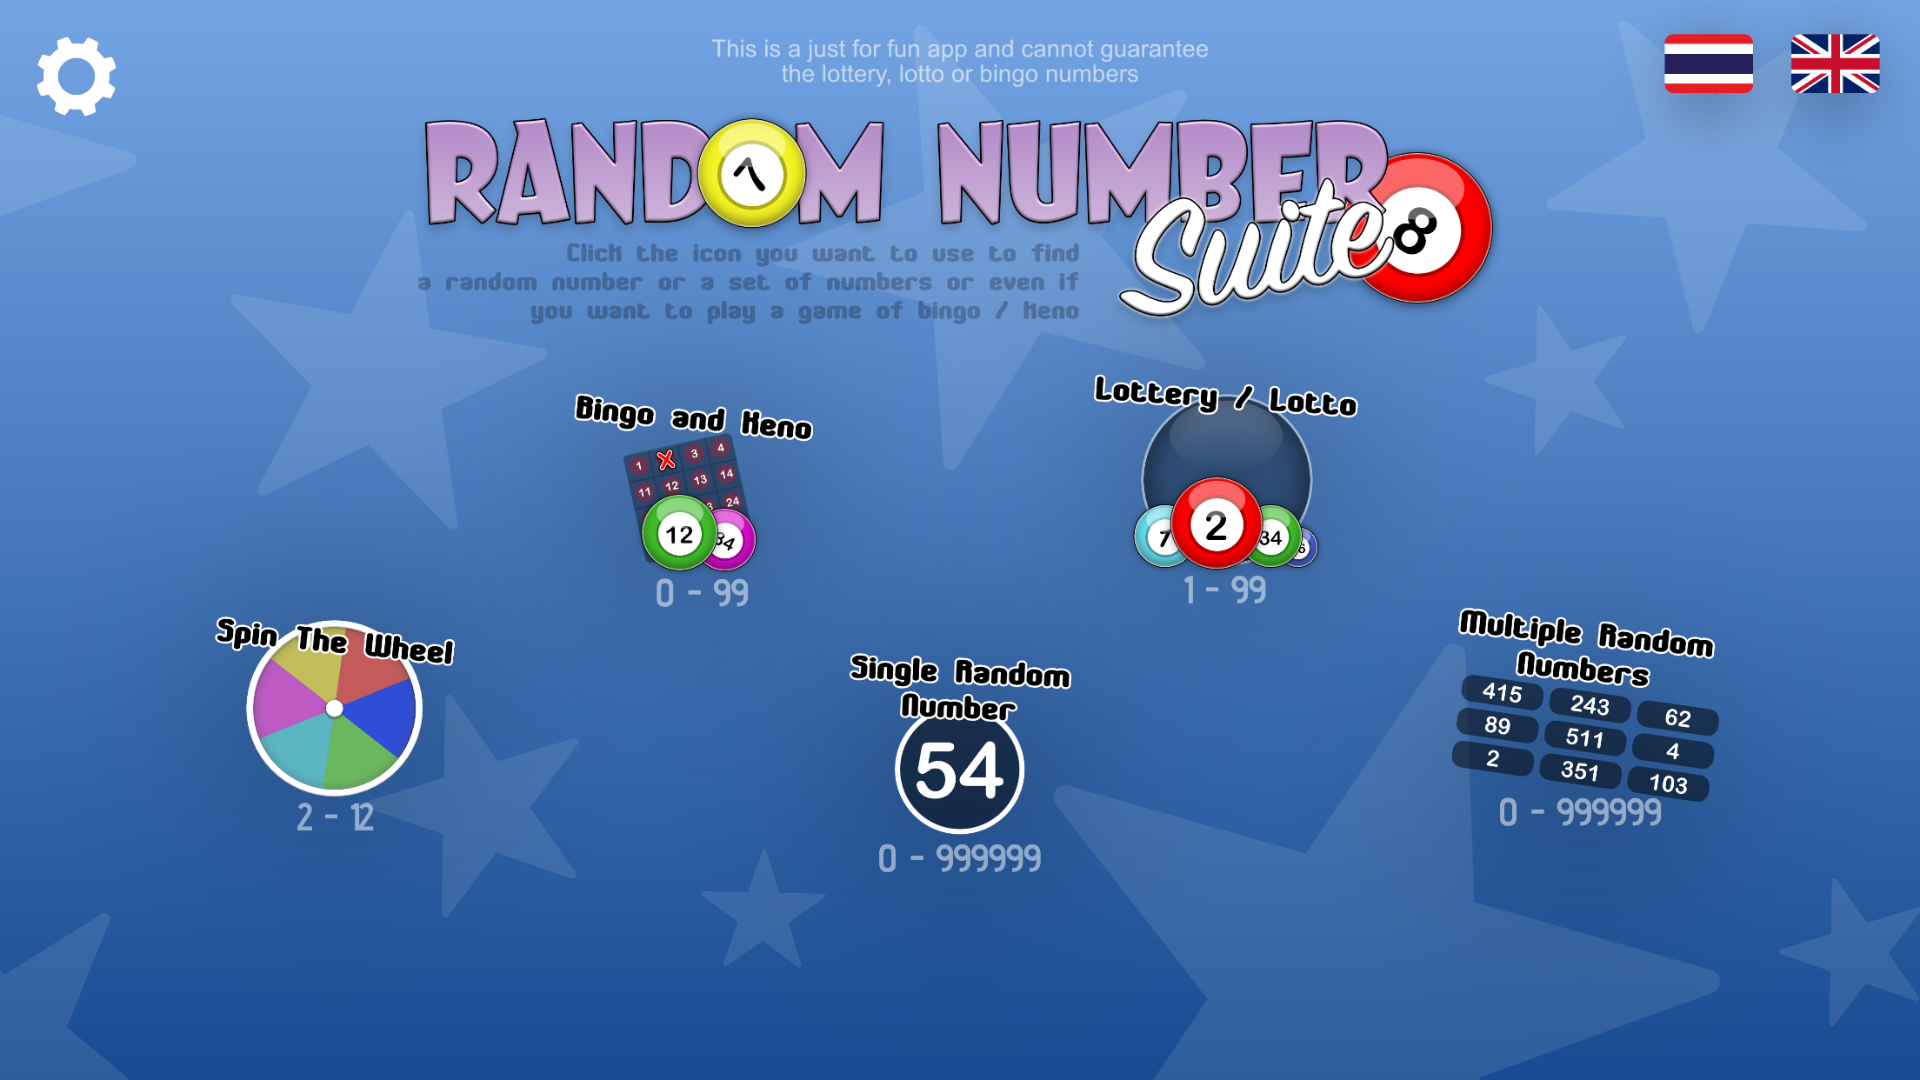 Random Number Suite